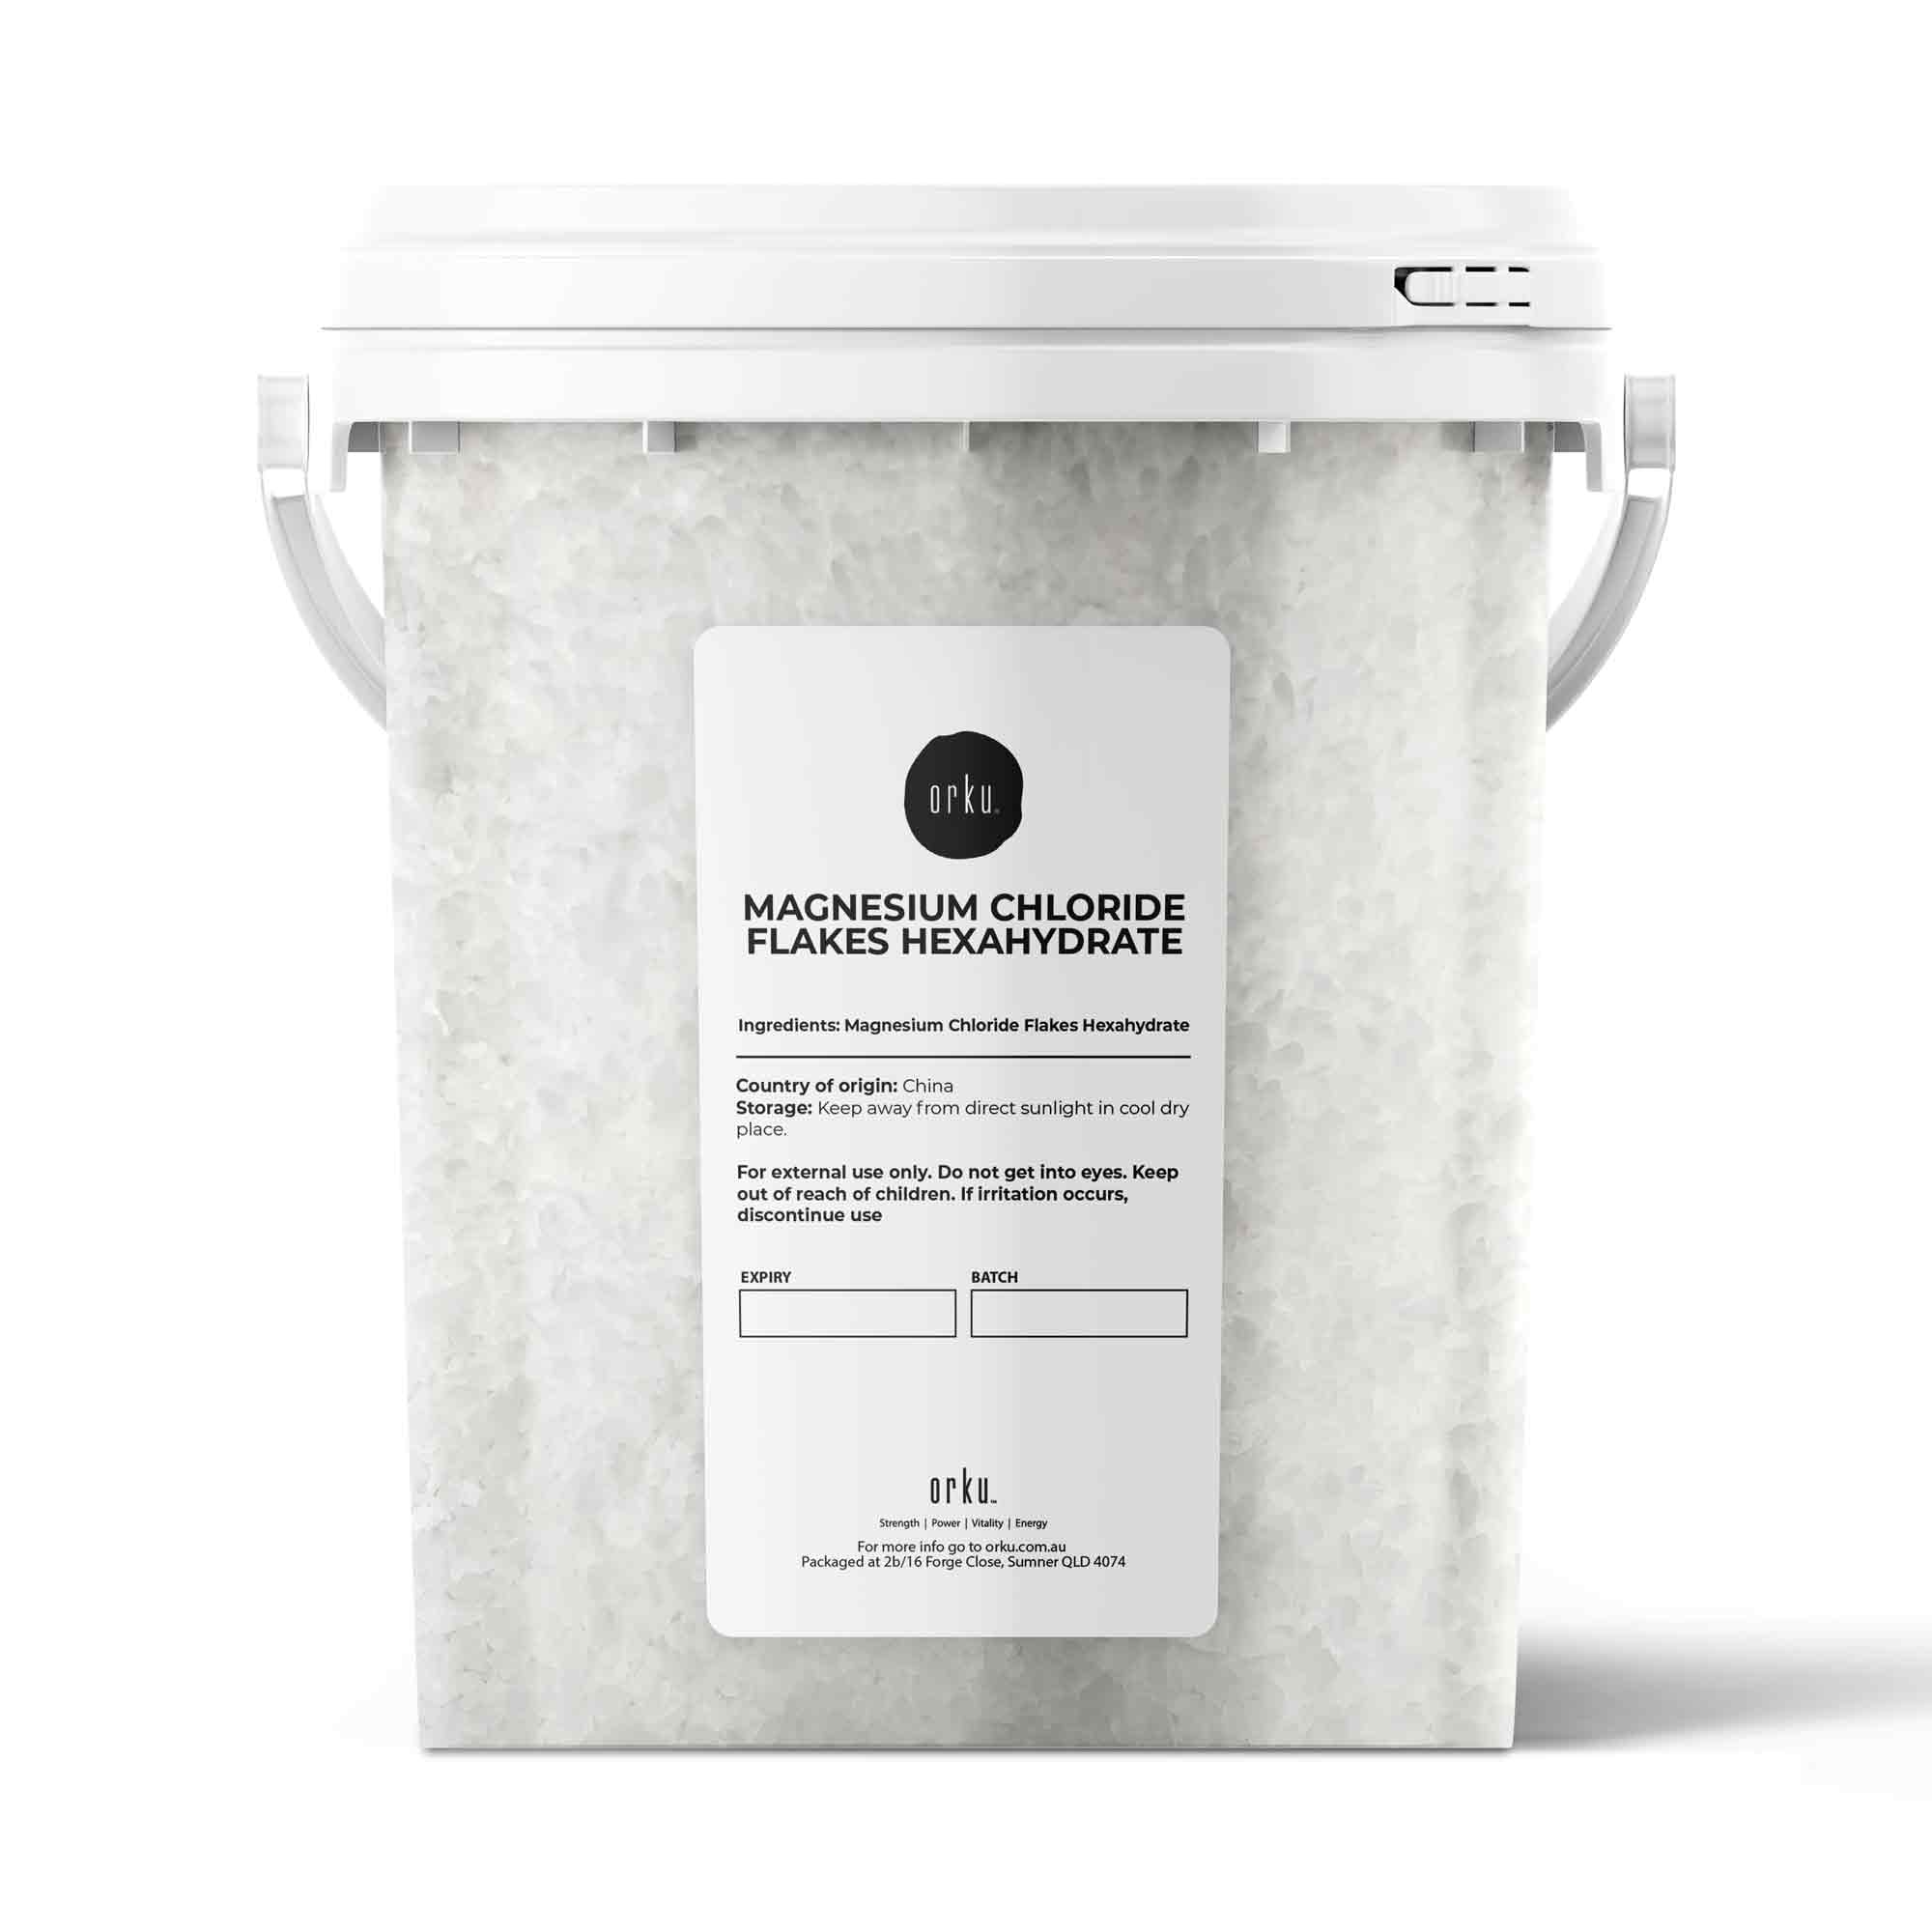 800g Magnesium Chloride Flakes Hexahydrate Tub - Organic USP Food Grade Salt